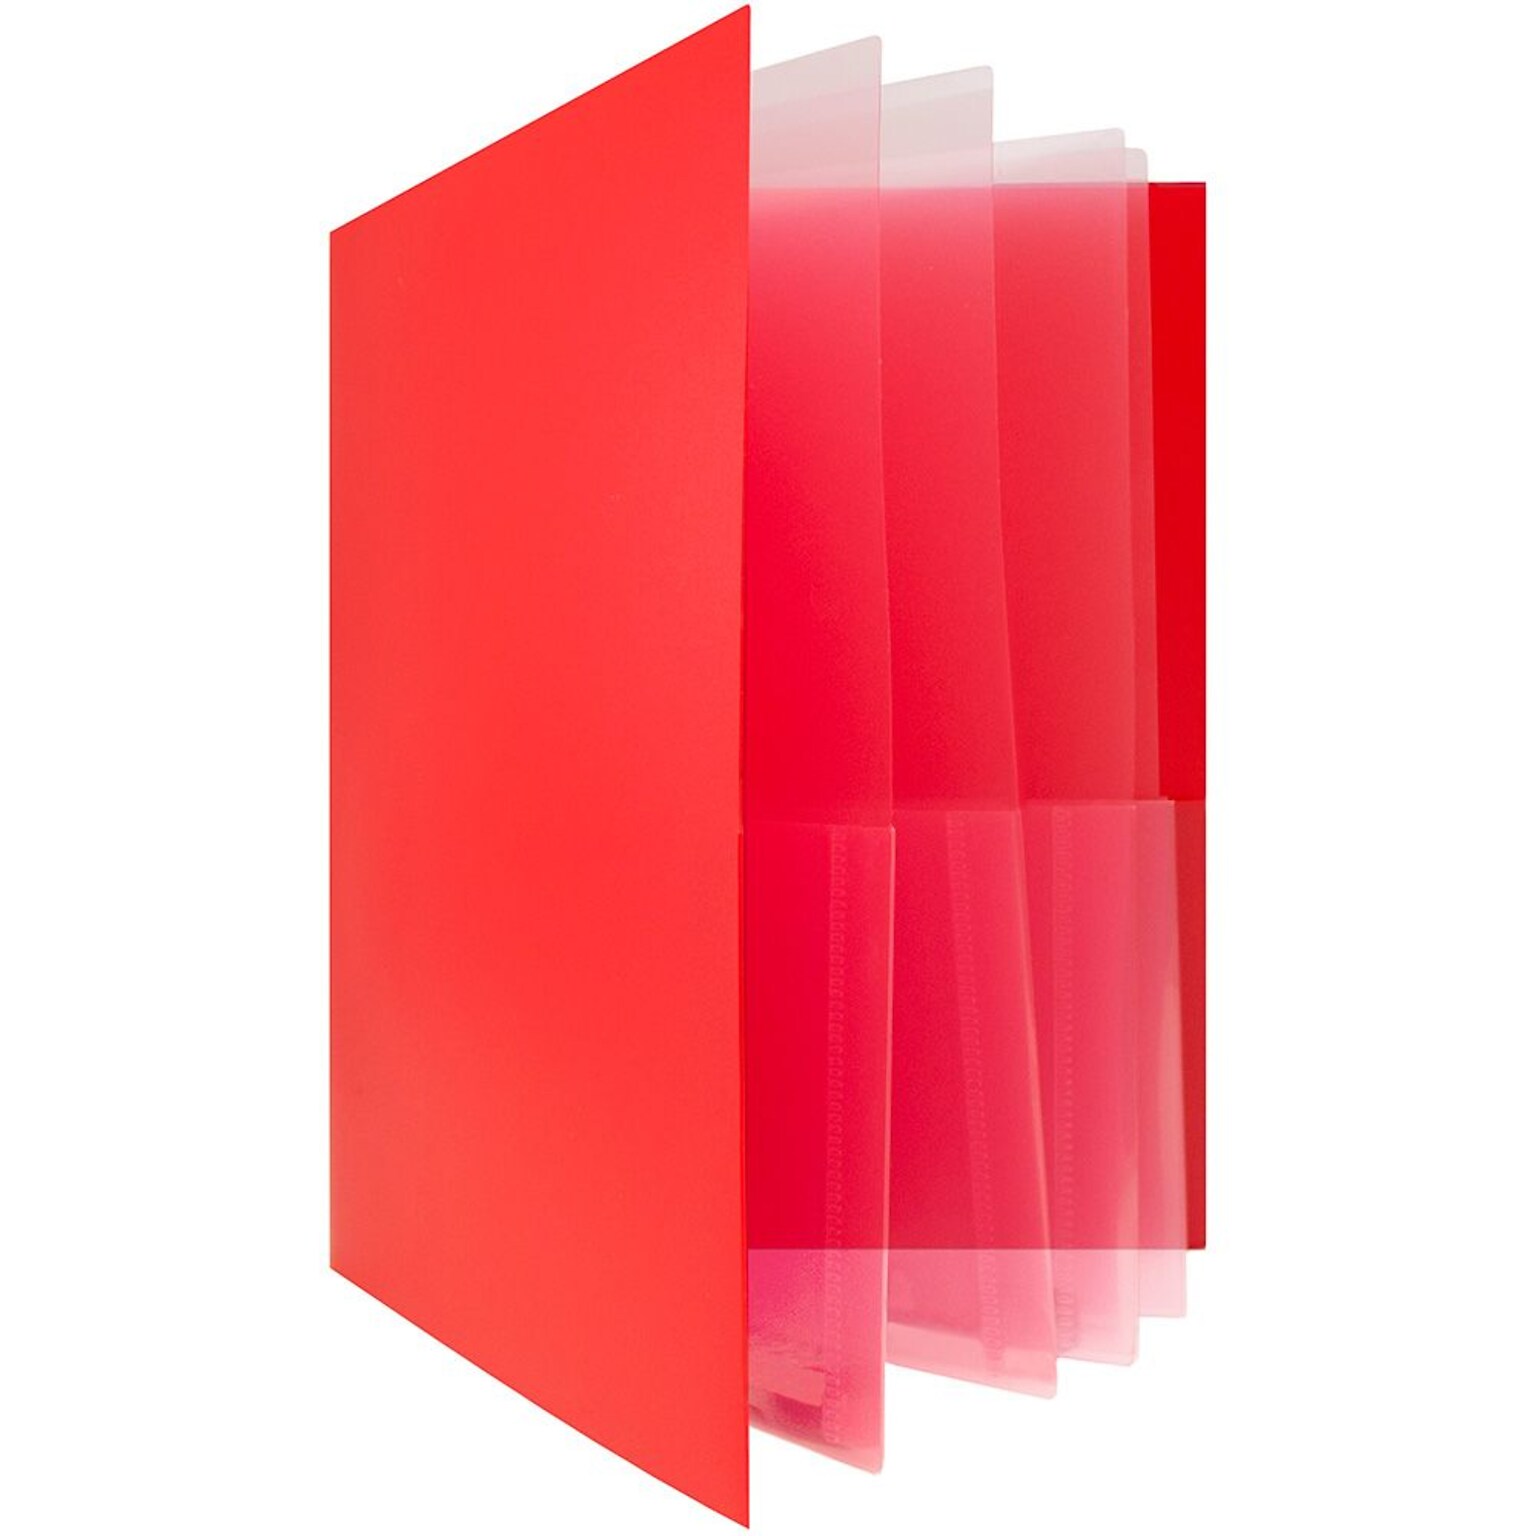 JAM Paper Heavy Duty 10-Pocket Plastic Folder Organizer, Red, 2/Pack (389MP10REJ)